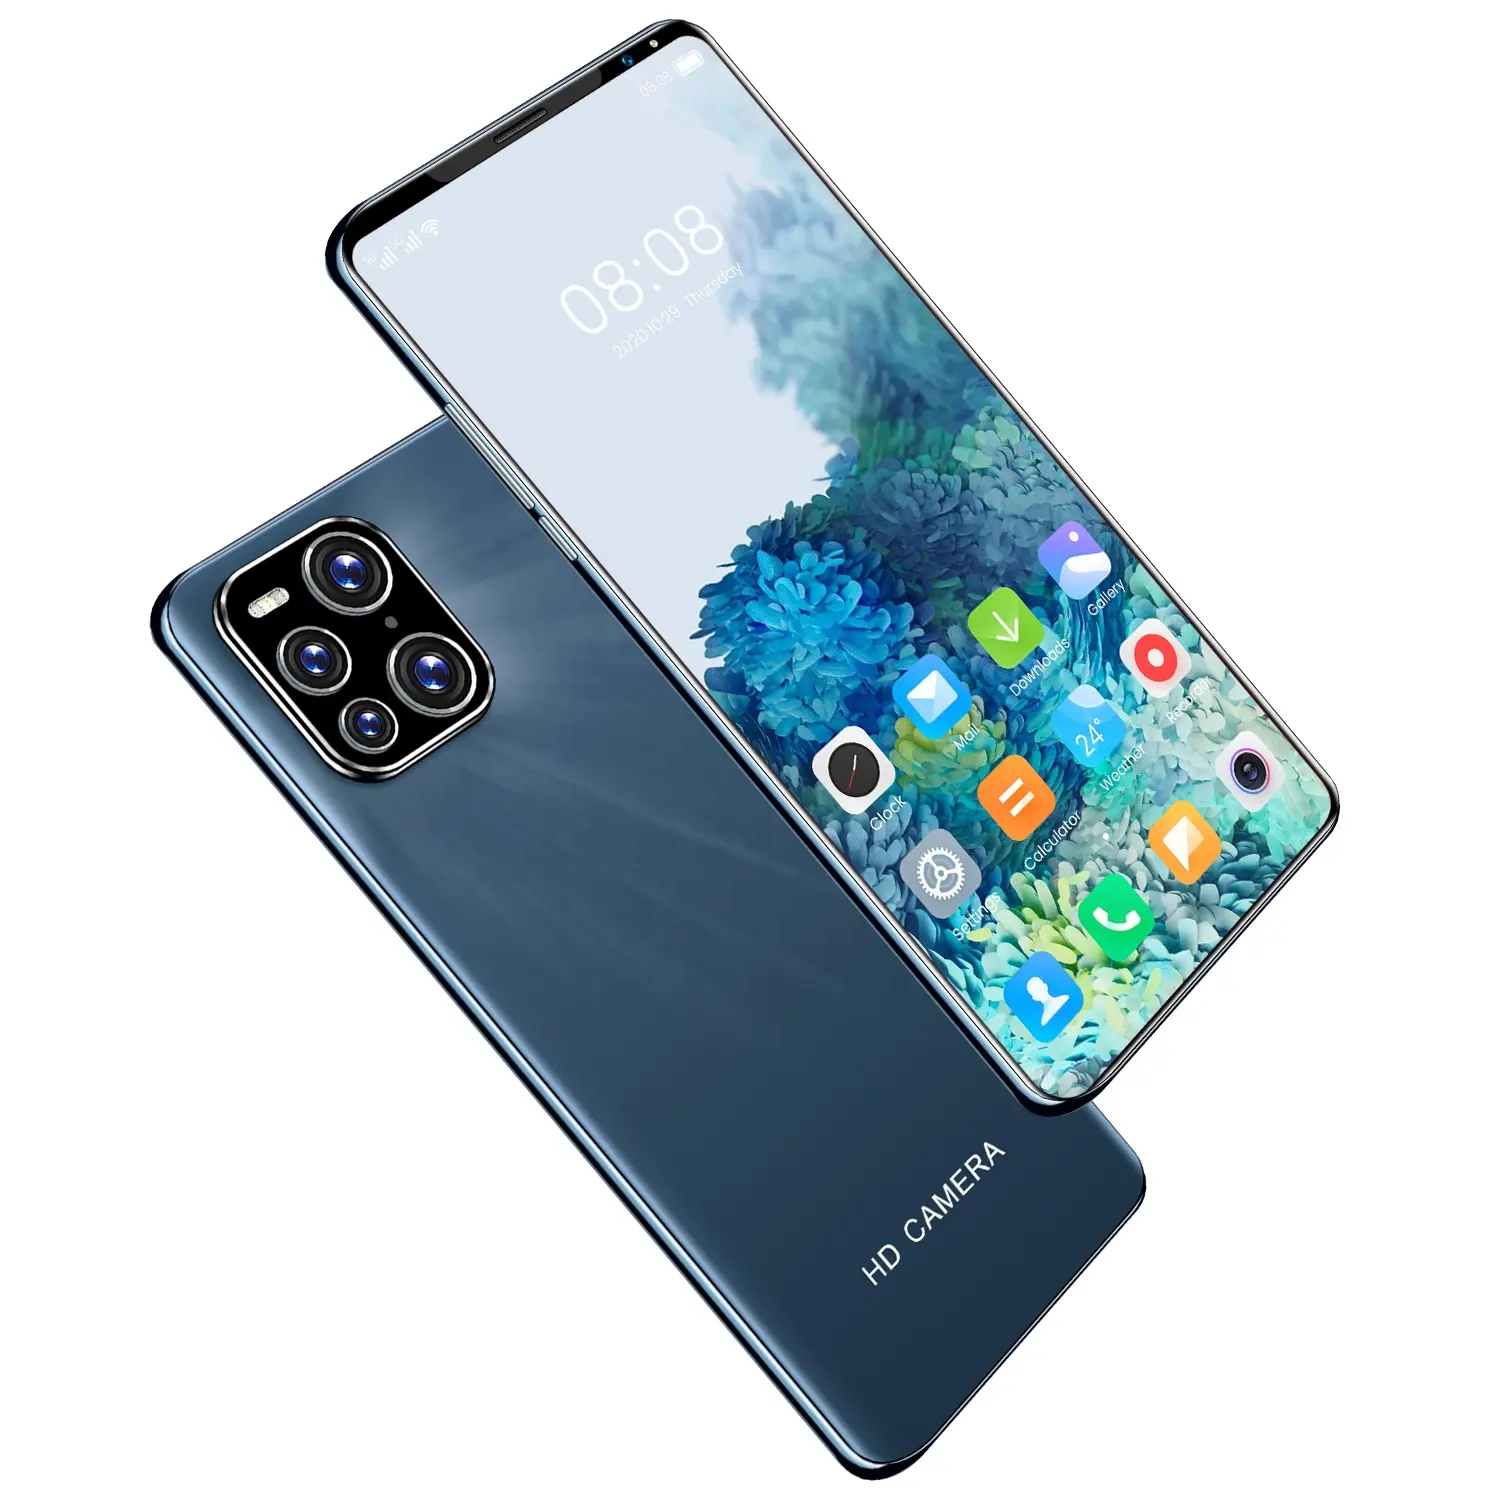 2022 चीन सस्ते लोकप्रिय गर्म X3 प्रो 5.5 इंच H-D स्क्रीन 5G सेल फोन Deca कोर एंड्रॉयड 10.1 मोबाइल फोन 16GB + 512GB सेलफोन